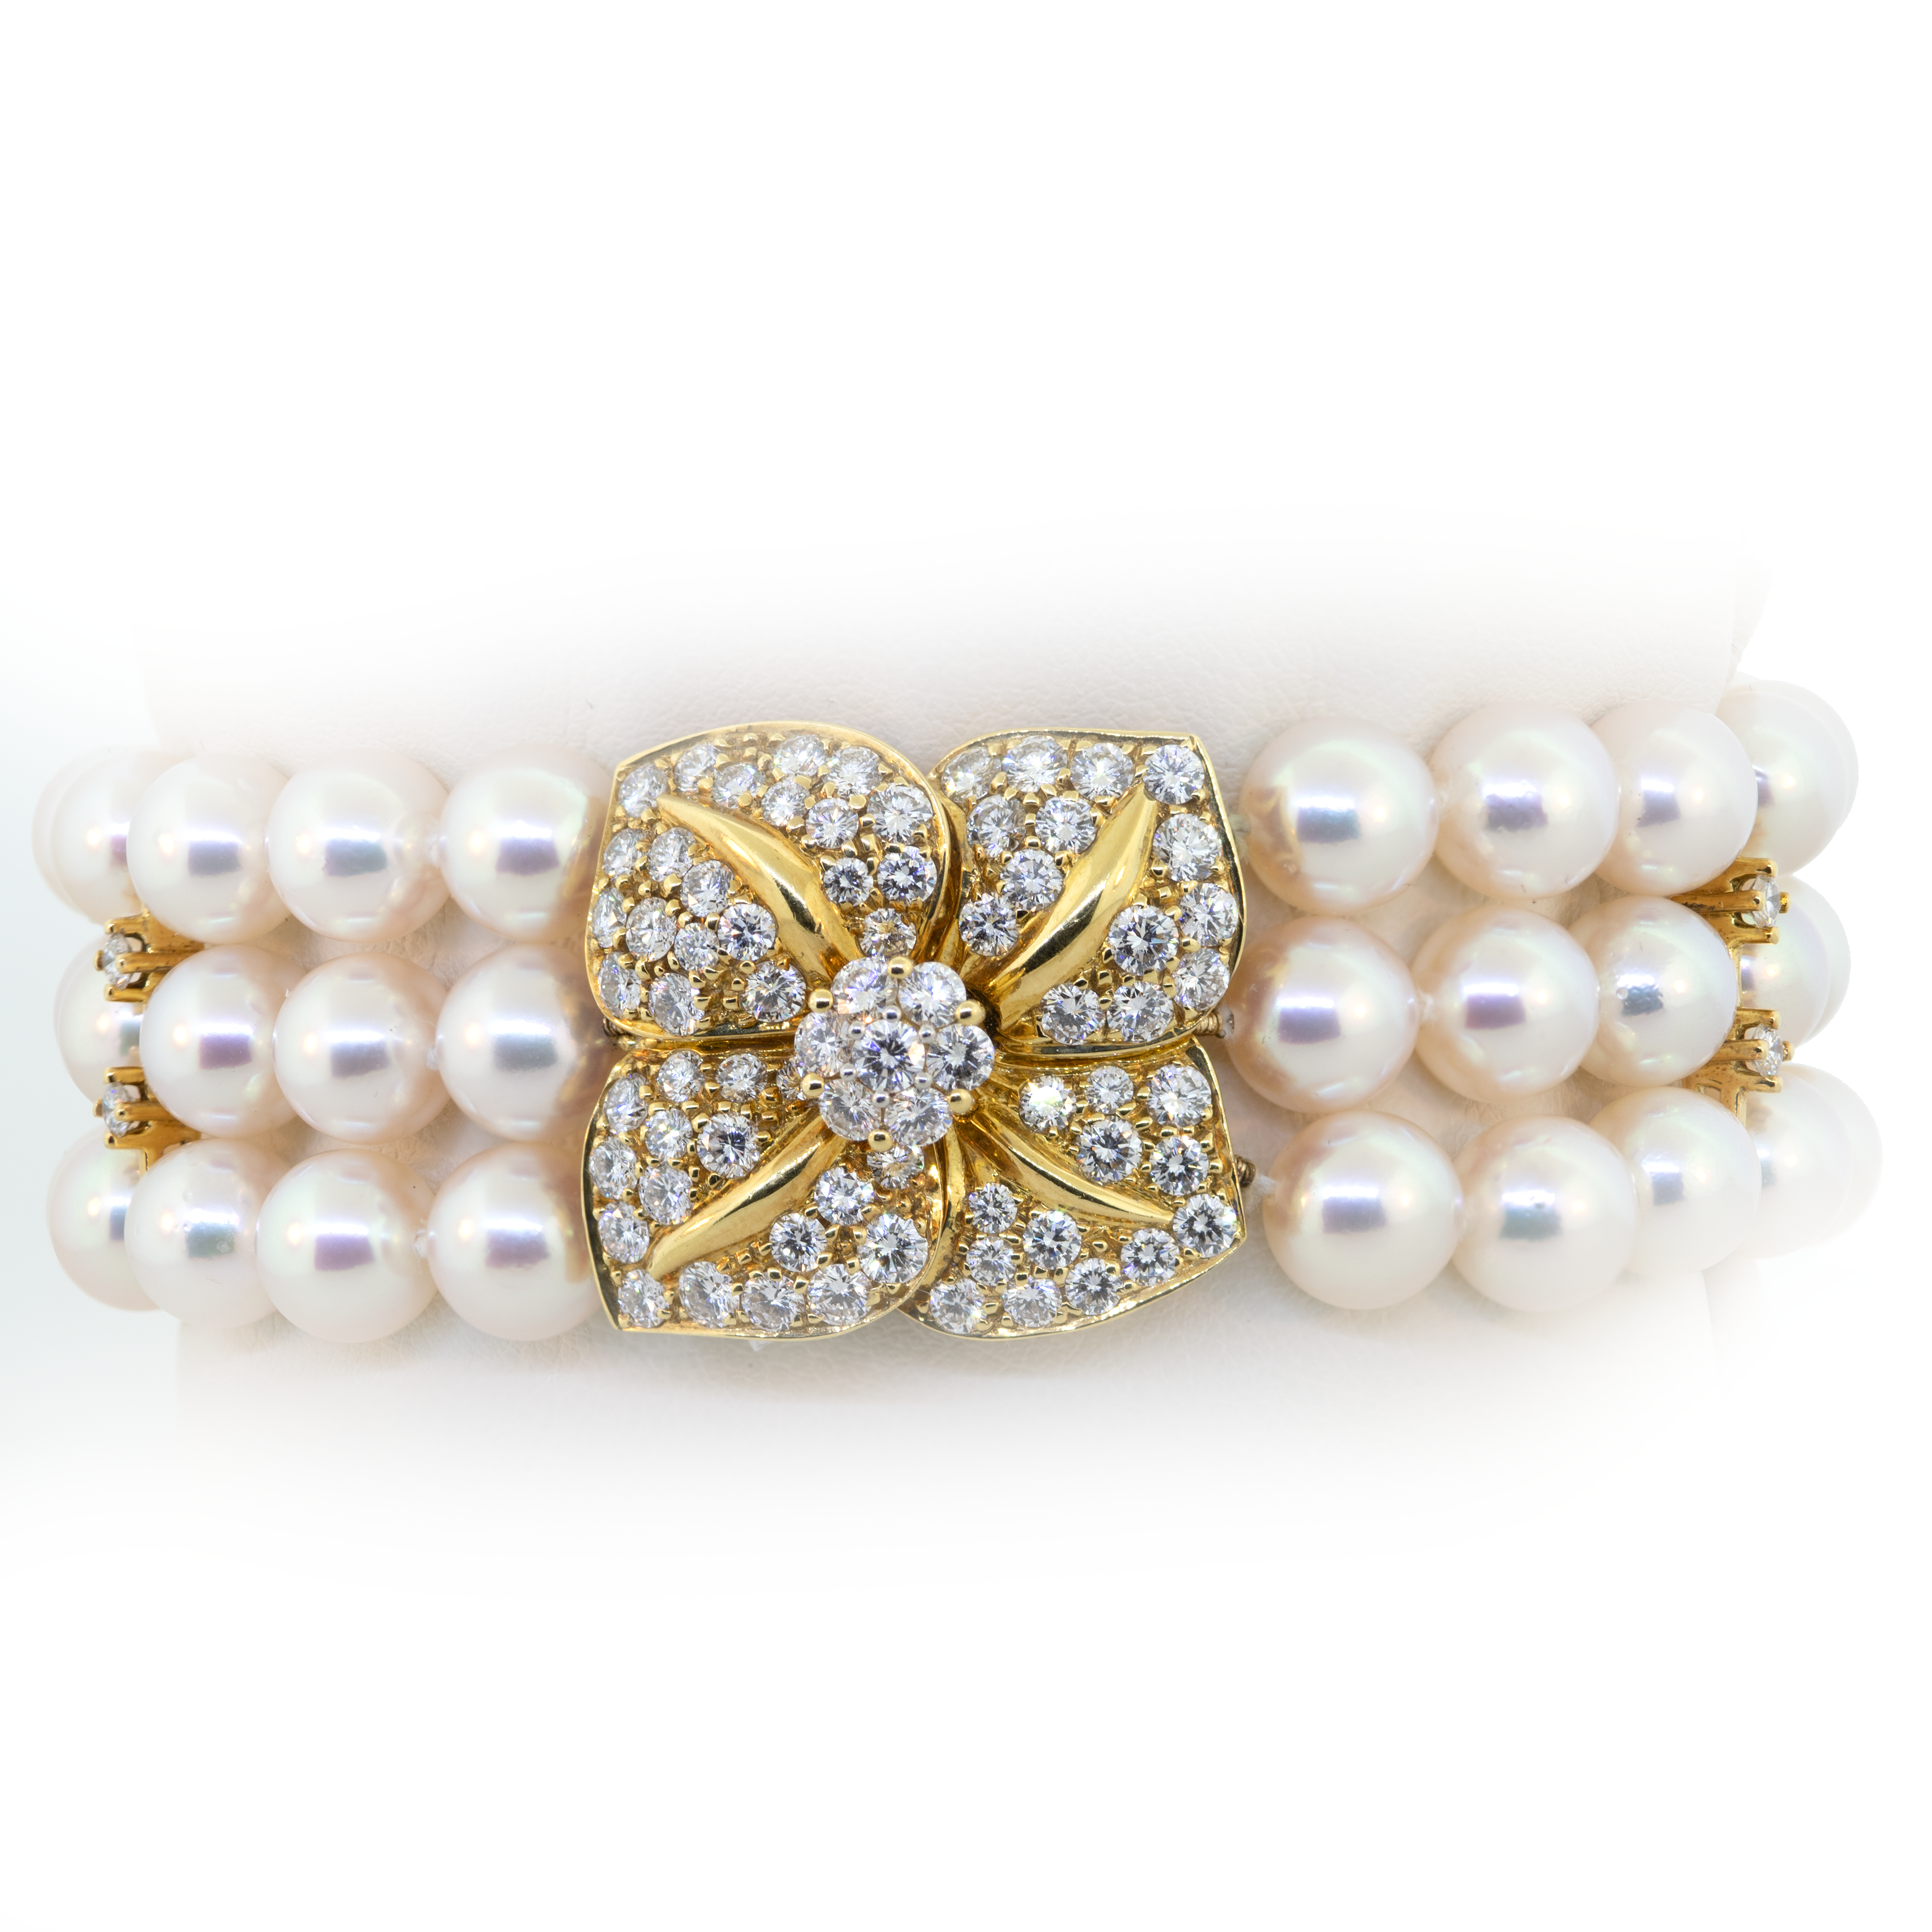 Pearl Bracelet - White Pearl and Swarovski Crystal - Wedding Gift -  Anniversary Gift - Katherine Pearl Bracelet by Blingvine